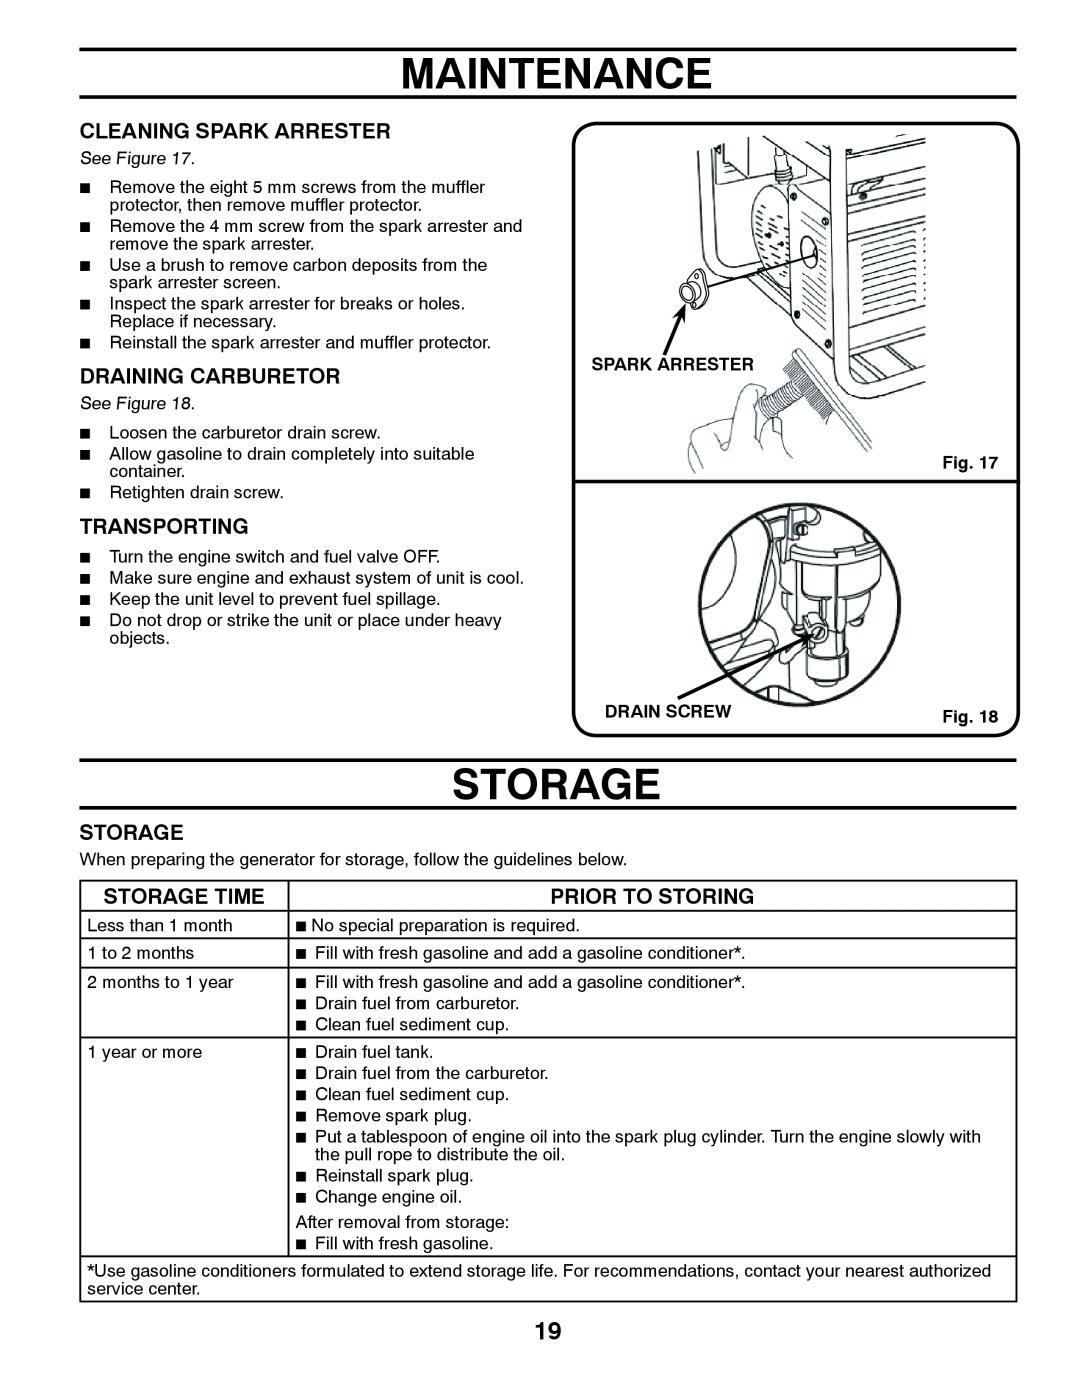 Poulan 420077 owner manual Storage, Maintenance, Spark Arrester, Drain Screw 